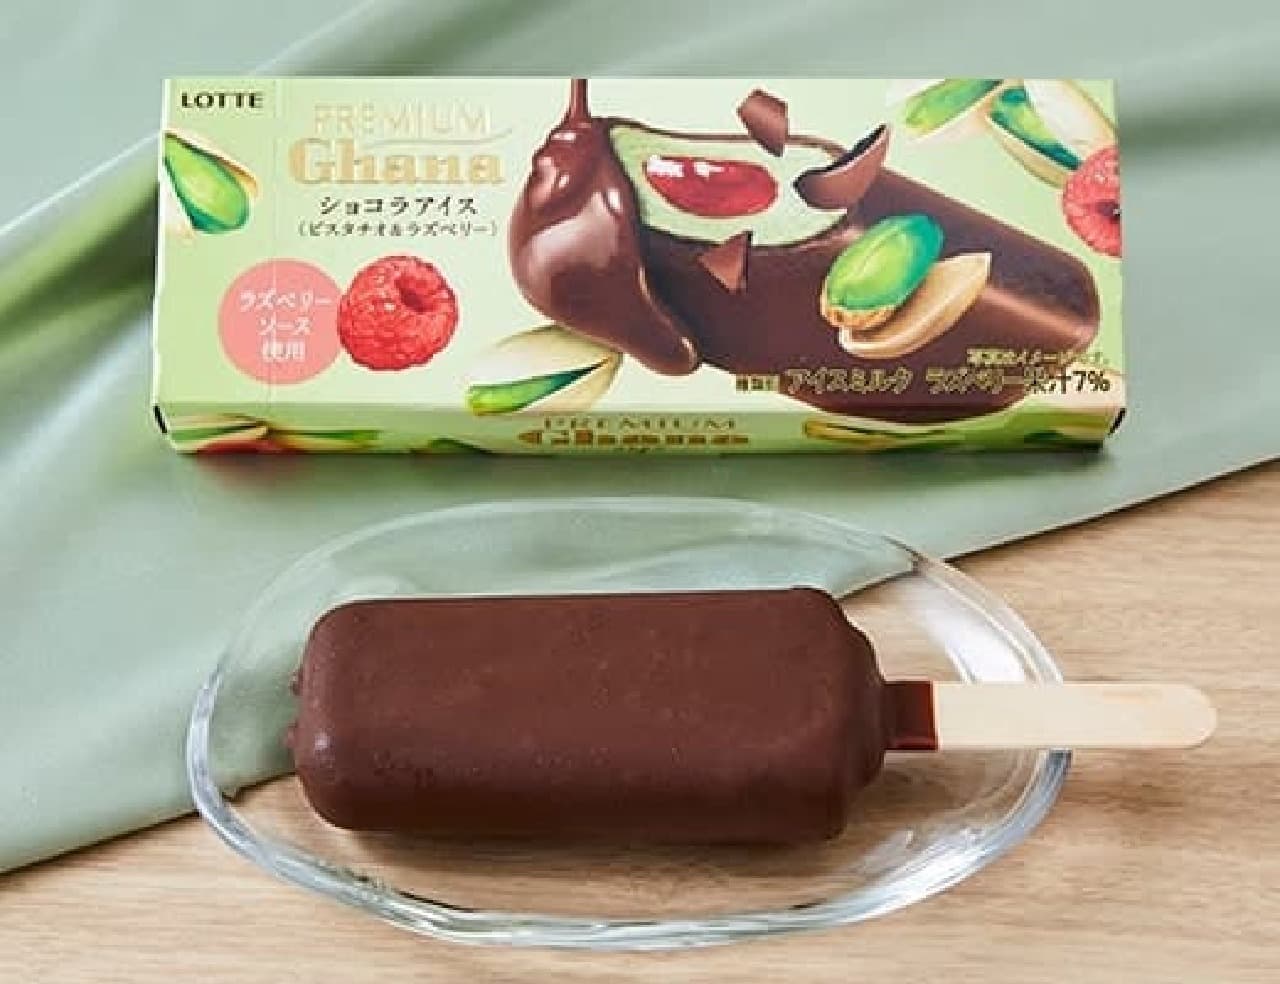 LAWSON "Lotte Premium Ghana Chocolat Ice Cream [Pistachio & Raspberry] 76ml